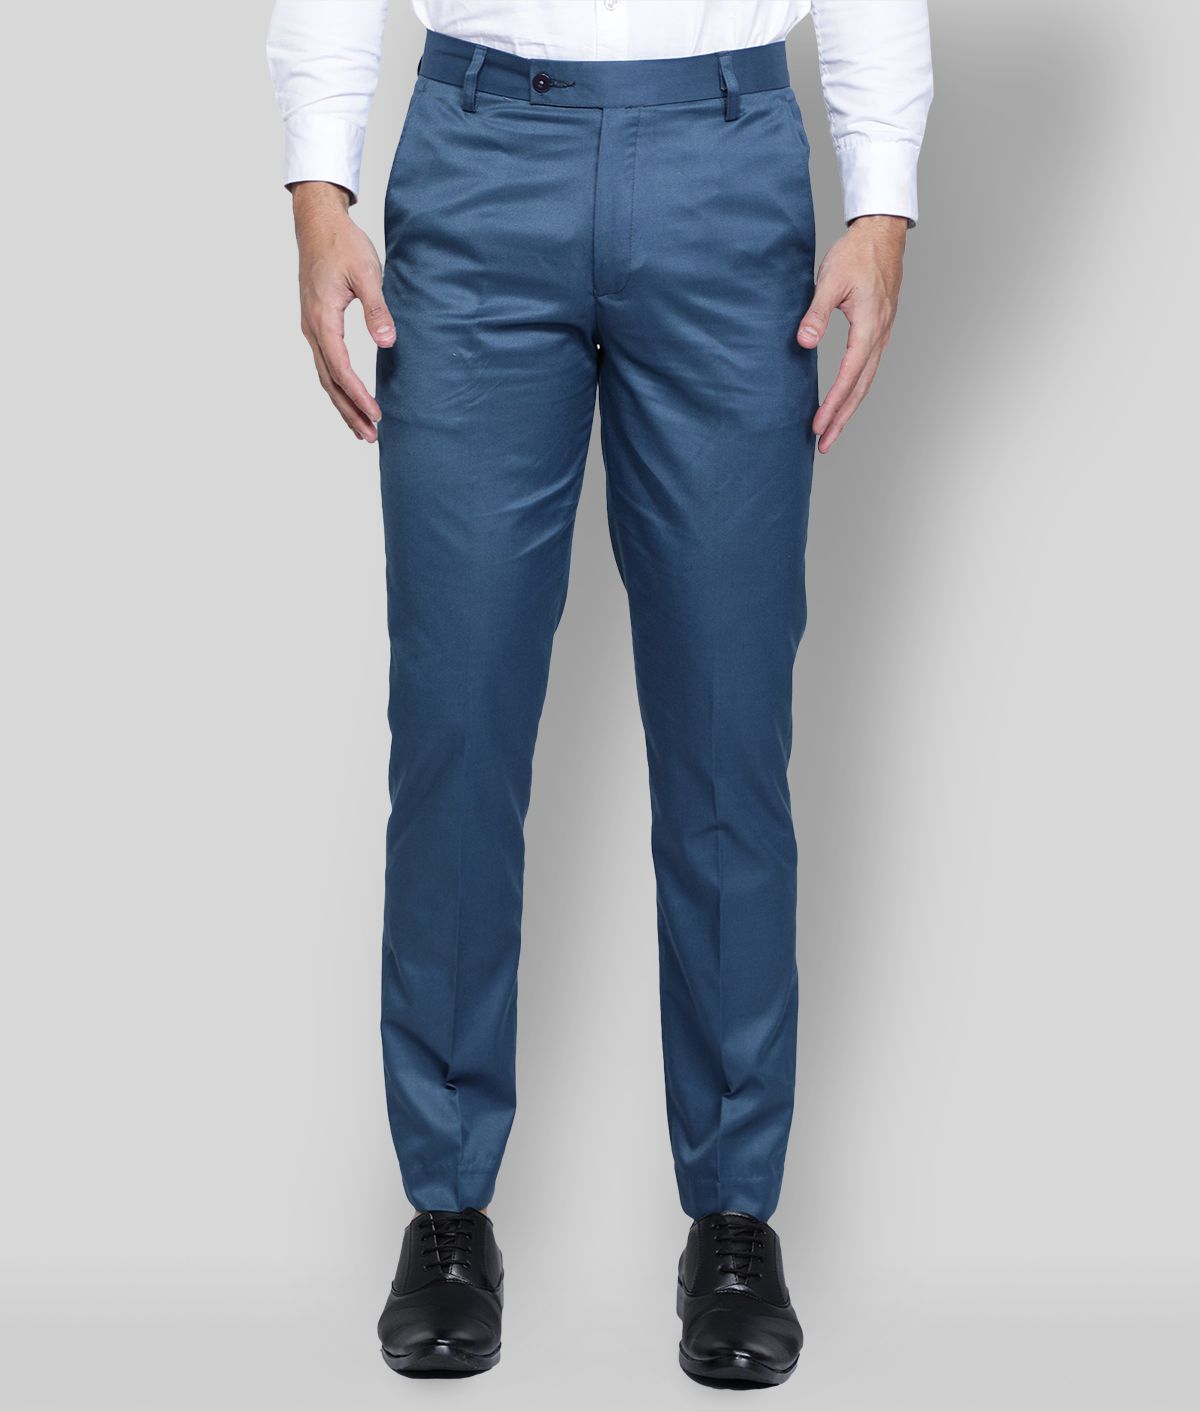     			Haul Chic - Turquoise Blue Cotton Blend Slim Fit Men's Formal Pants (Pack of 1)